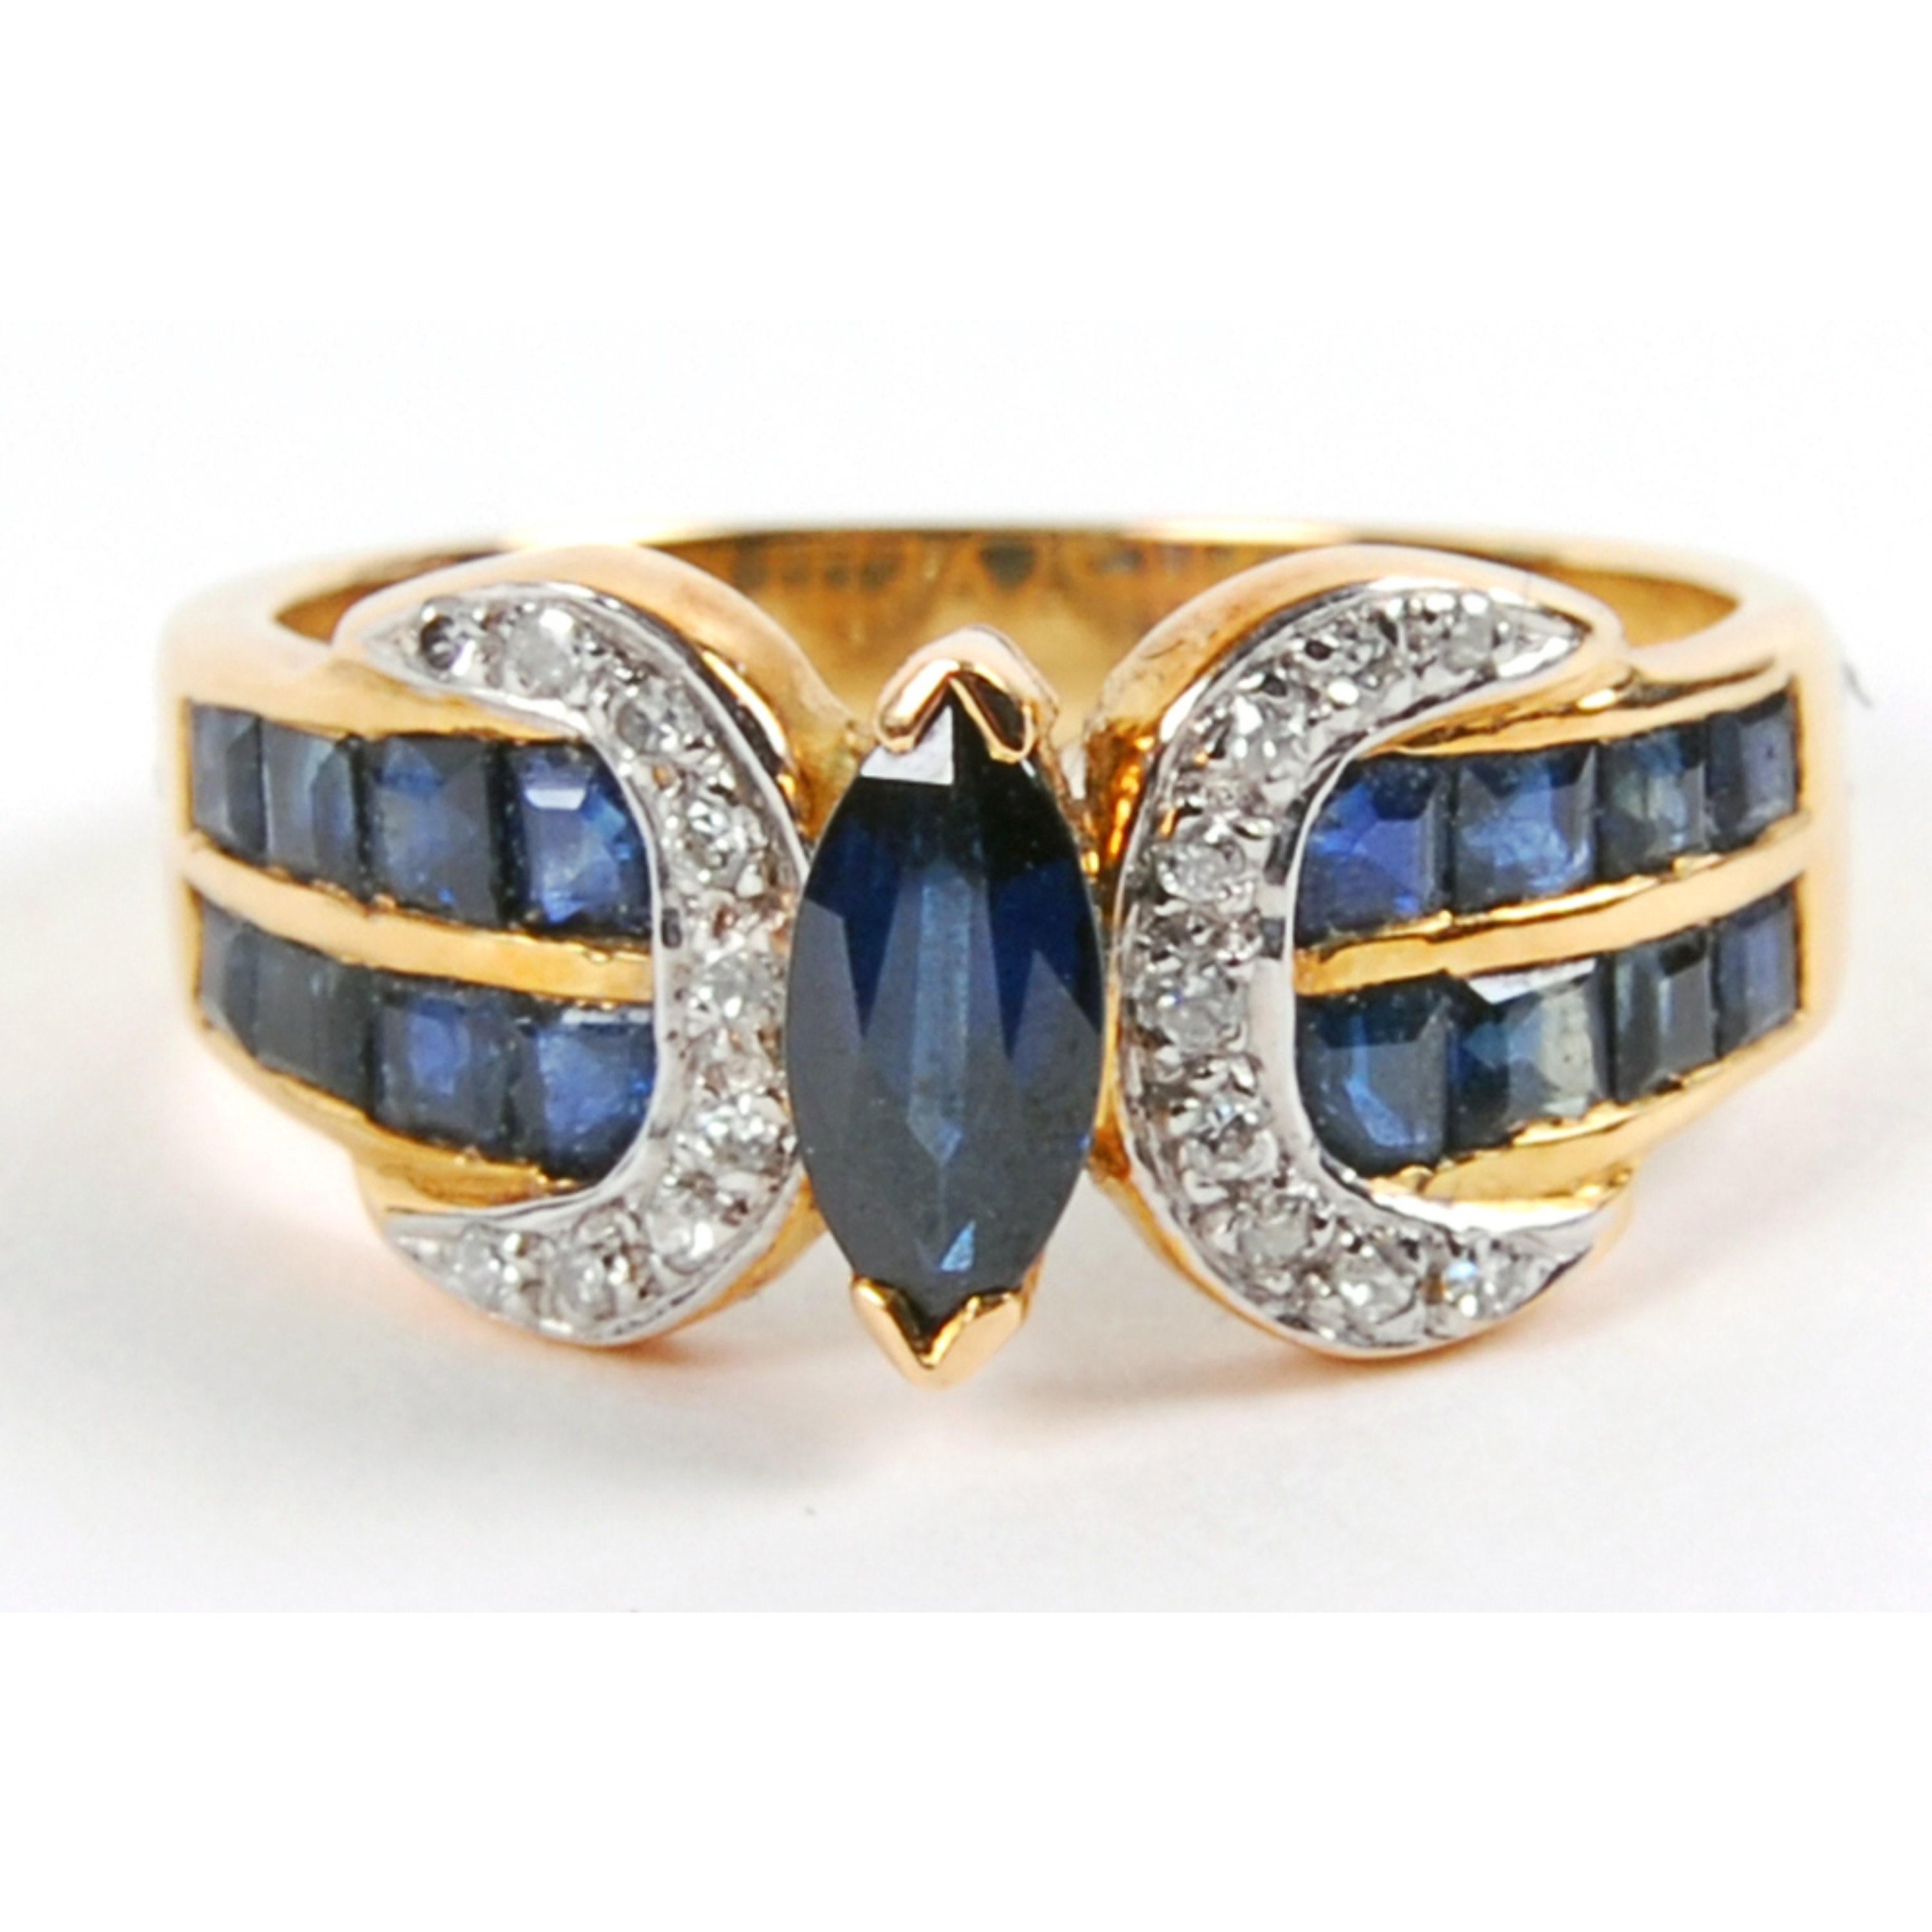 For Sale:  2 Carat Ceylon Sapphire Diamond Cocktail Ring Marquise Cut Sapphire Fashion Ring 5